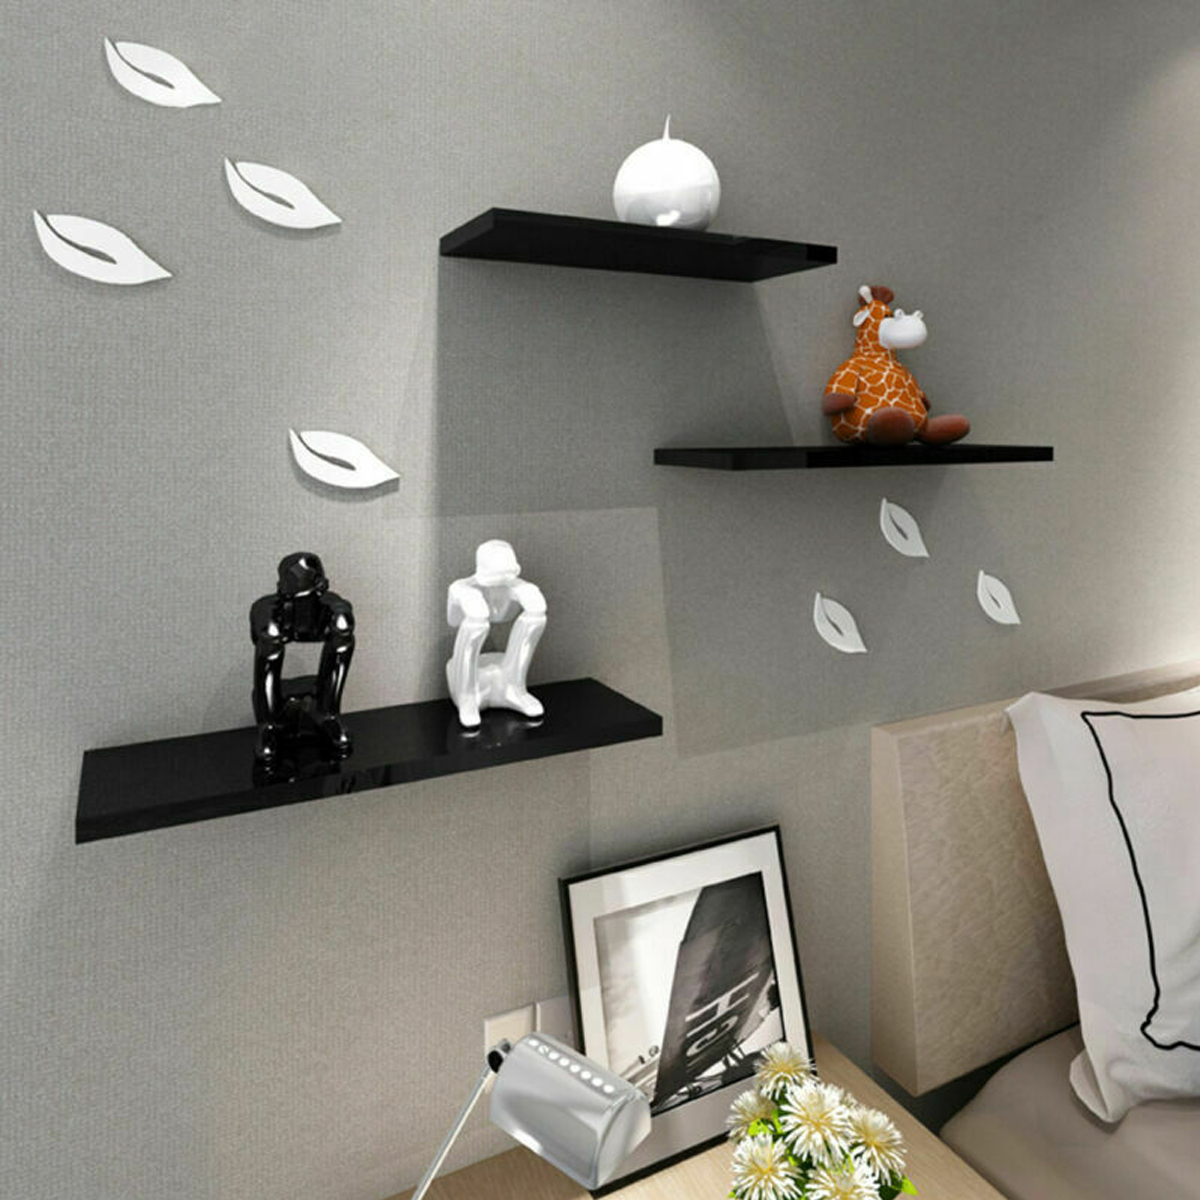 4-PcsSet-DIY-Wall-Shelves-Shelf-Floating-Display-Decor-Home-Wood-Wall-Mounted-1841567-10